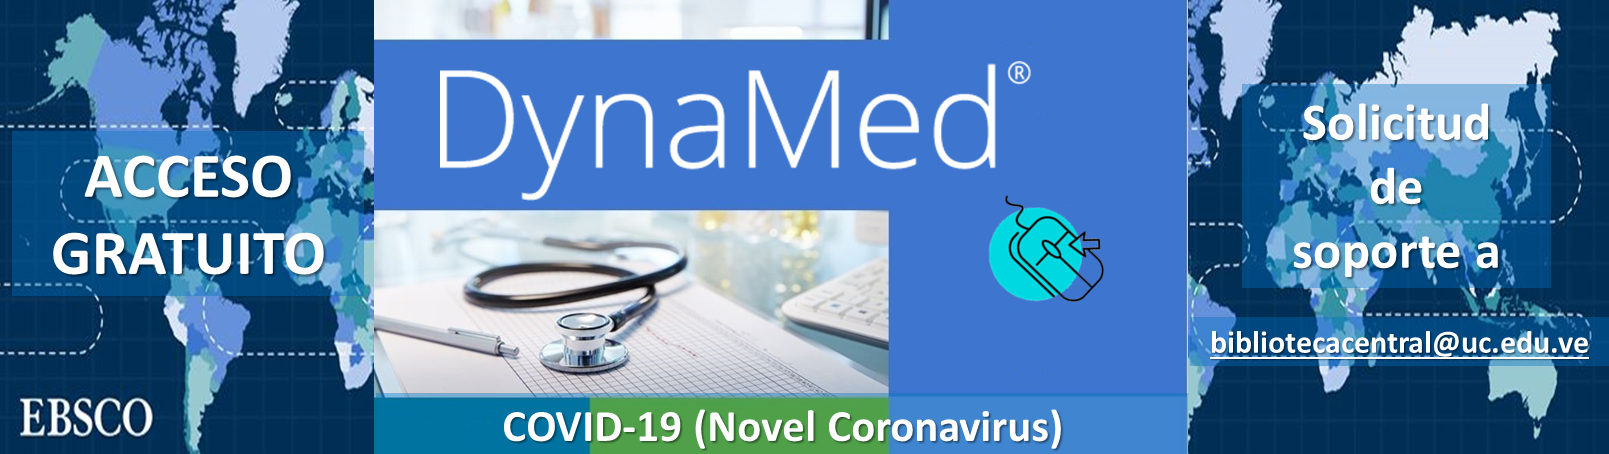 Dynamed- COVID-19 (Novel Coronavirus)